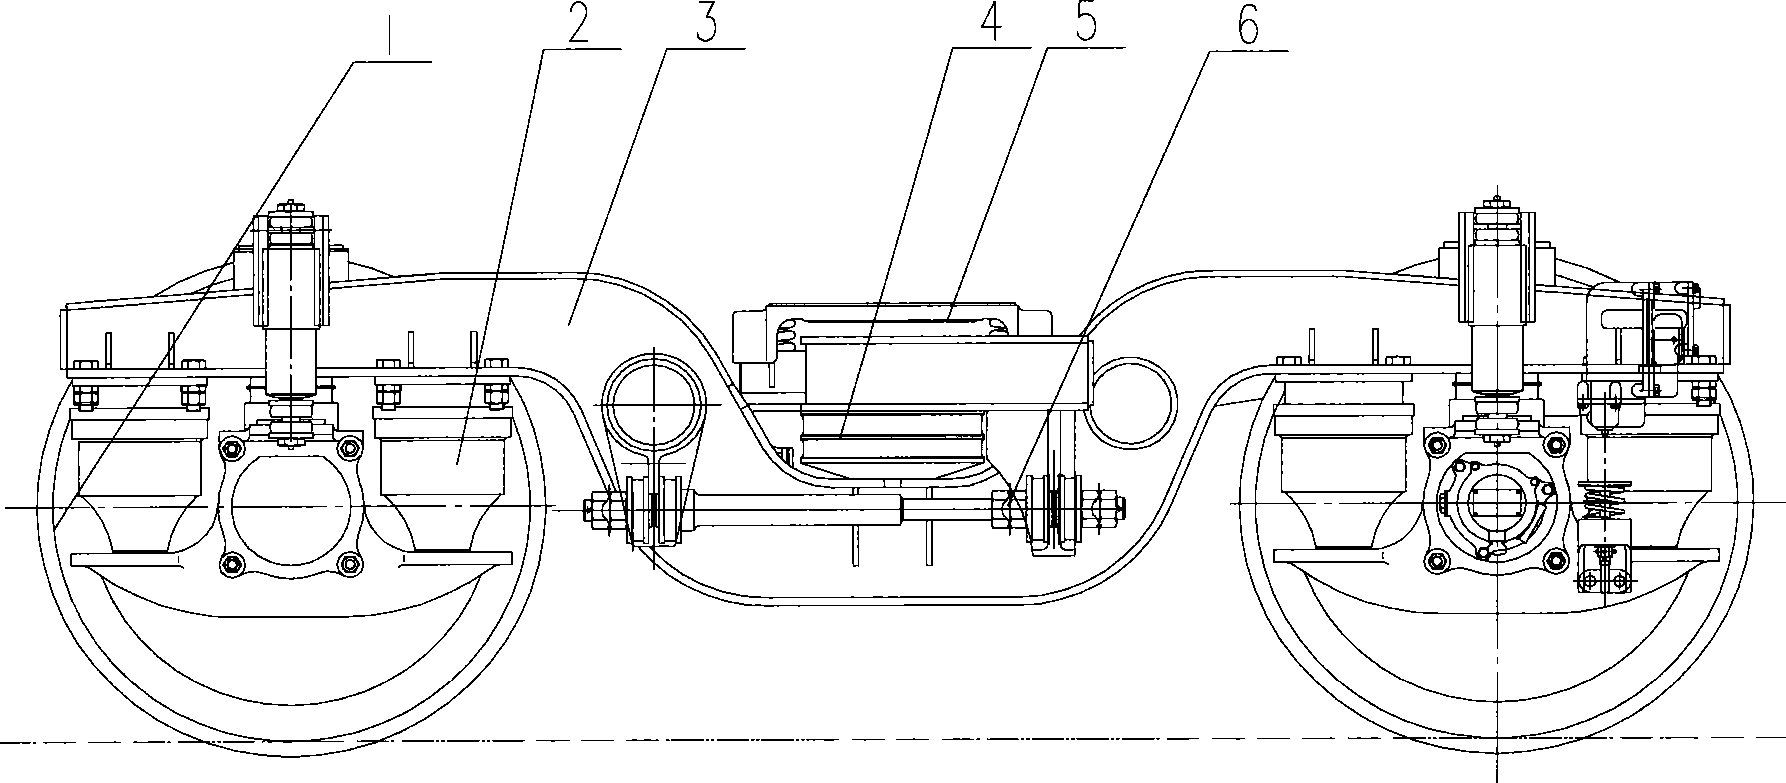 Longitudinal towing mechanism and steering frame with the longitudinal towing mechanism